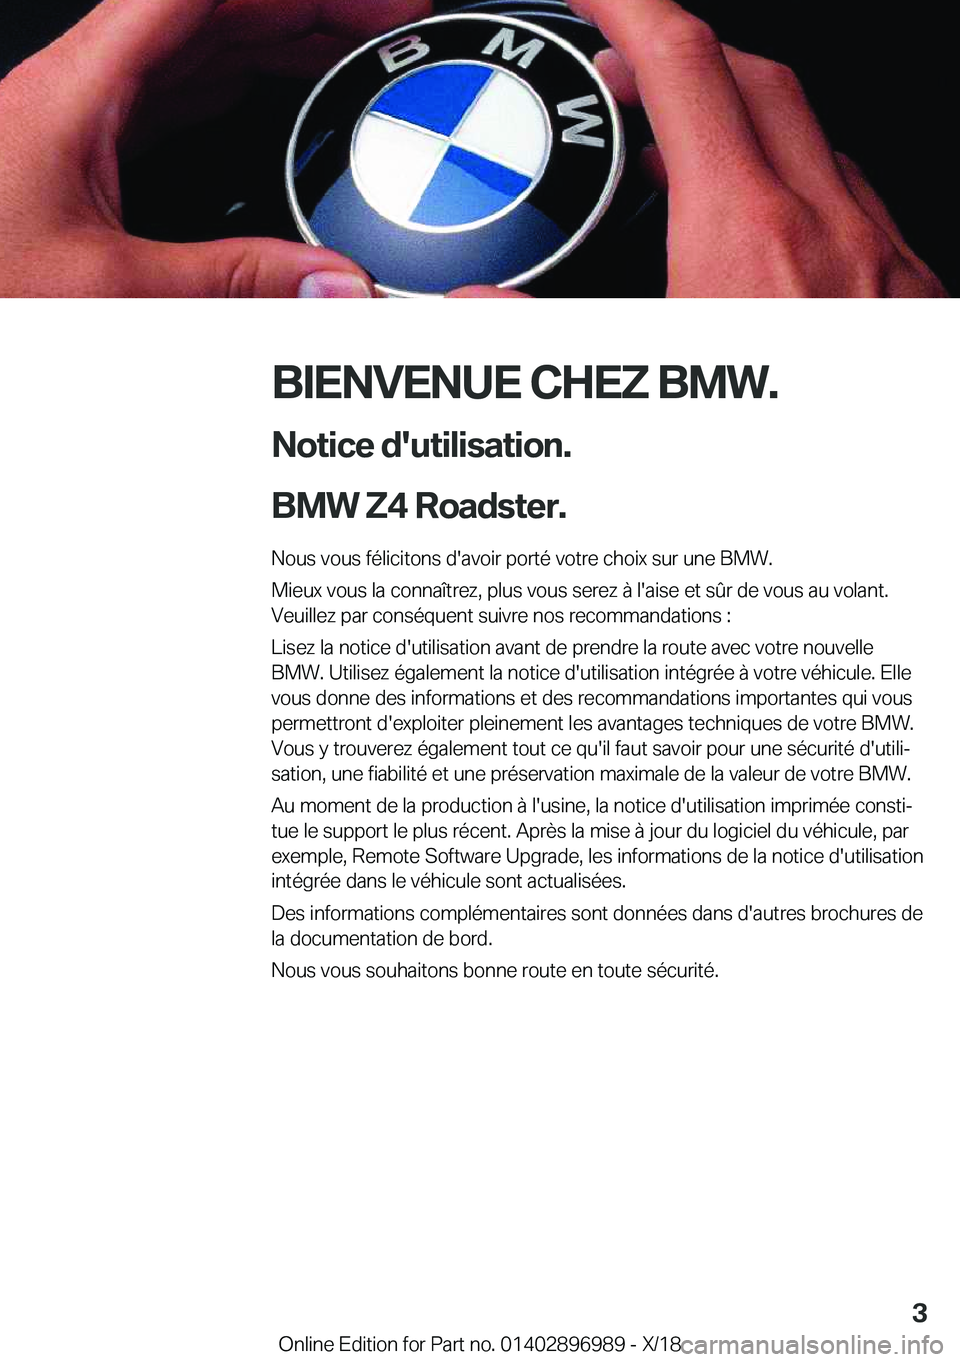 BMW Z4 2019  Notices Demploi (in French) �B�I�E�N�V�E�N�U�E��C�H�E�Z��B�M�W�.�N�o�t�i�c�e��d�'�u�t�i�l�i�s�a�t�i�o�n�.
�B�M�W��Z�4��R�o�a�d�s�t�e�r�.
�N�o�u�s��v�o�u�s��f�é�l�i�c�i�t�o�n�s��d�'�a�v�o�i�r��p�o�r�t�é��v�o�t